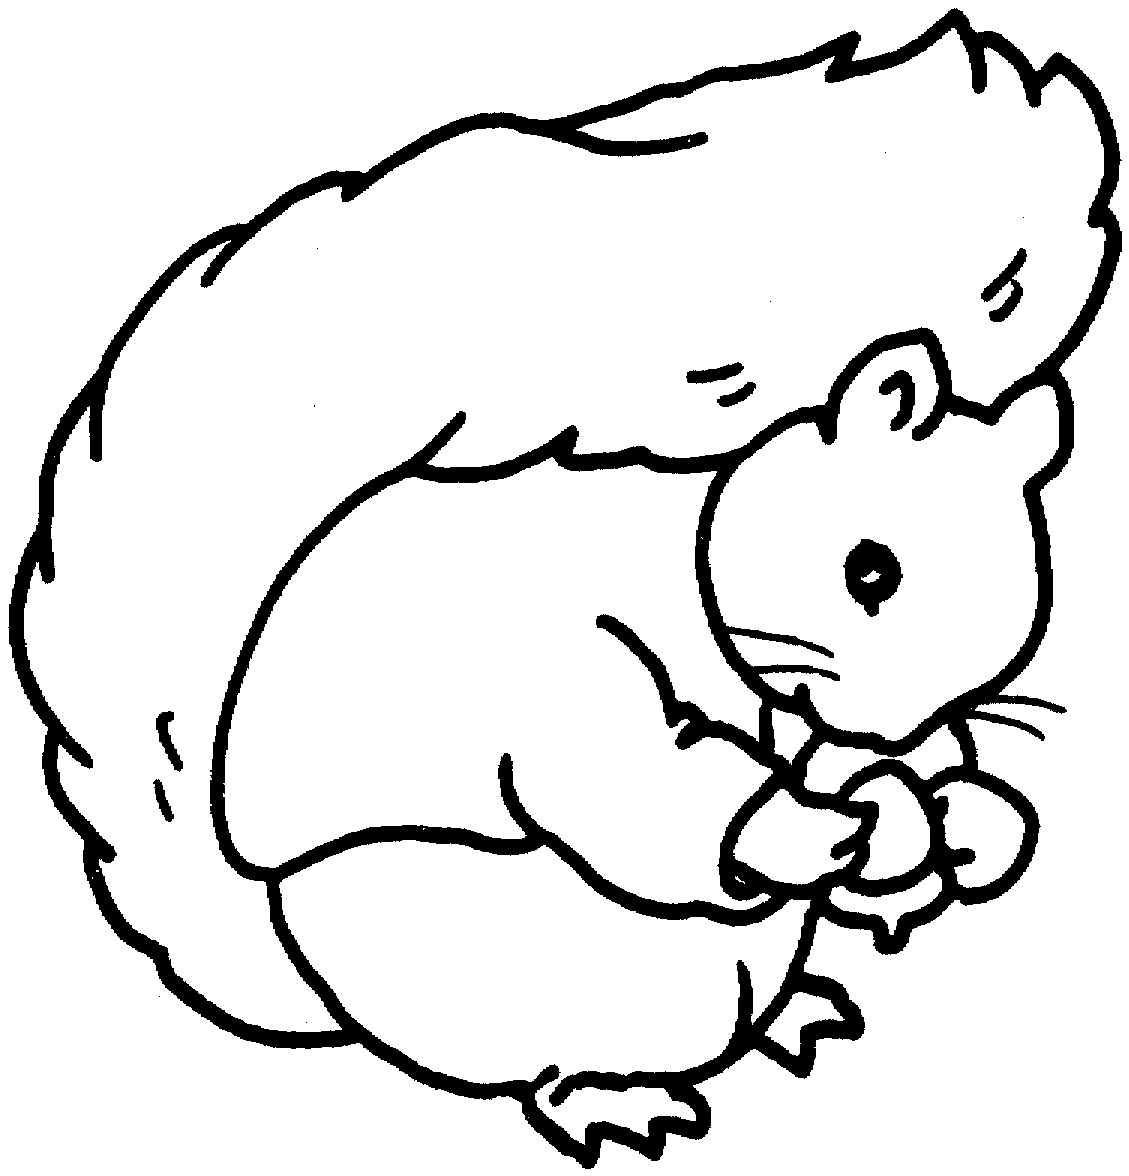 Página para colorir: Esquilo (animais) #6166 - Páginas para Colorir Imprimíveis Gratuitamente